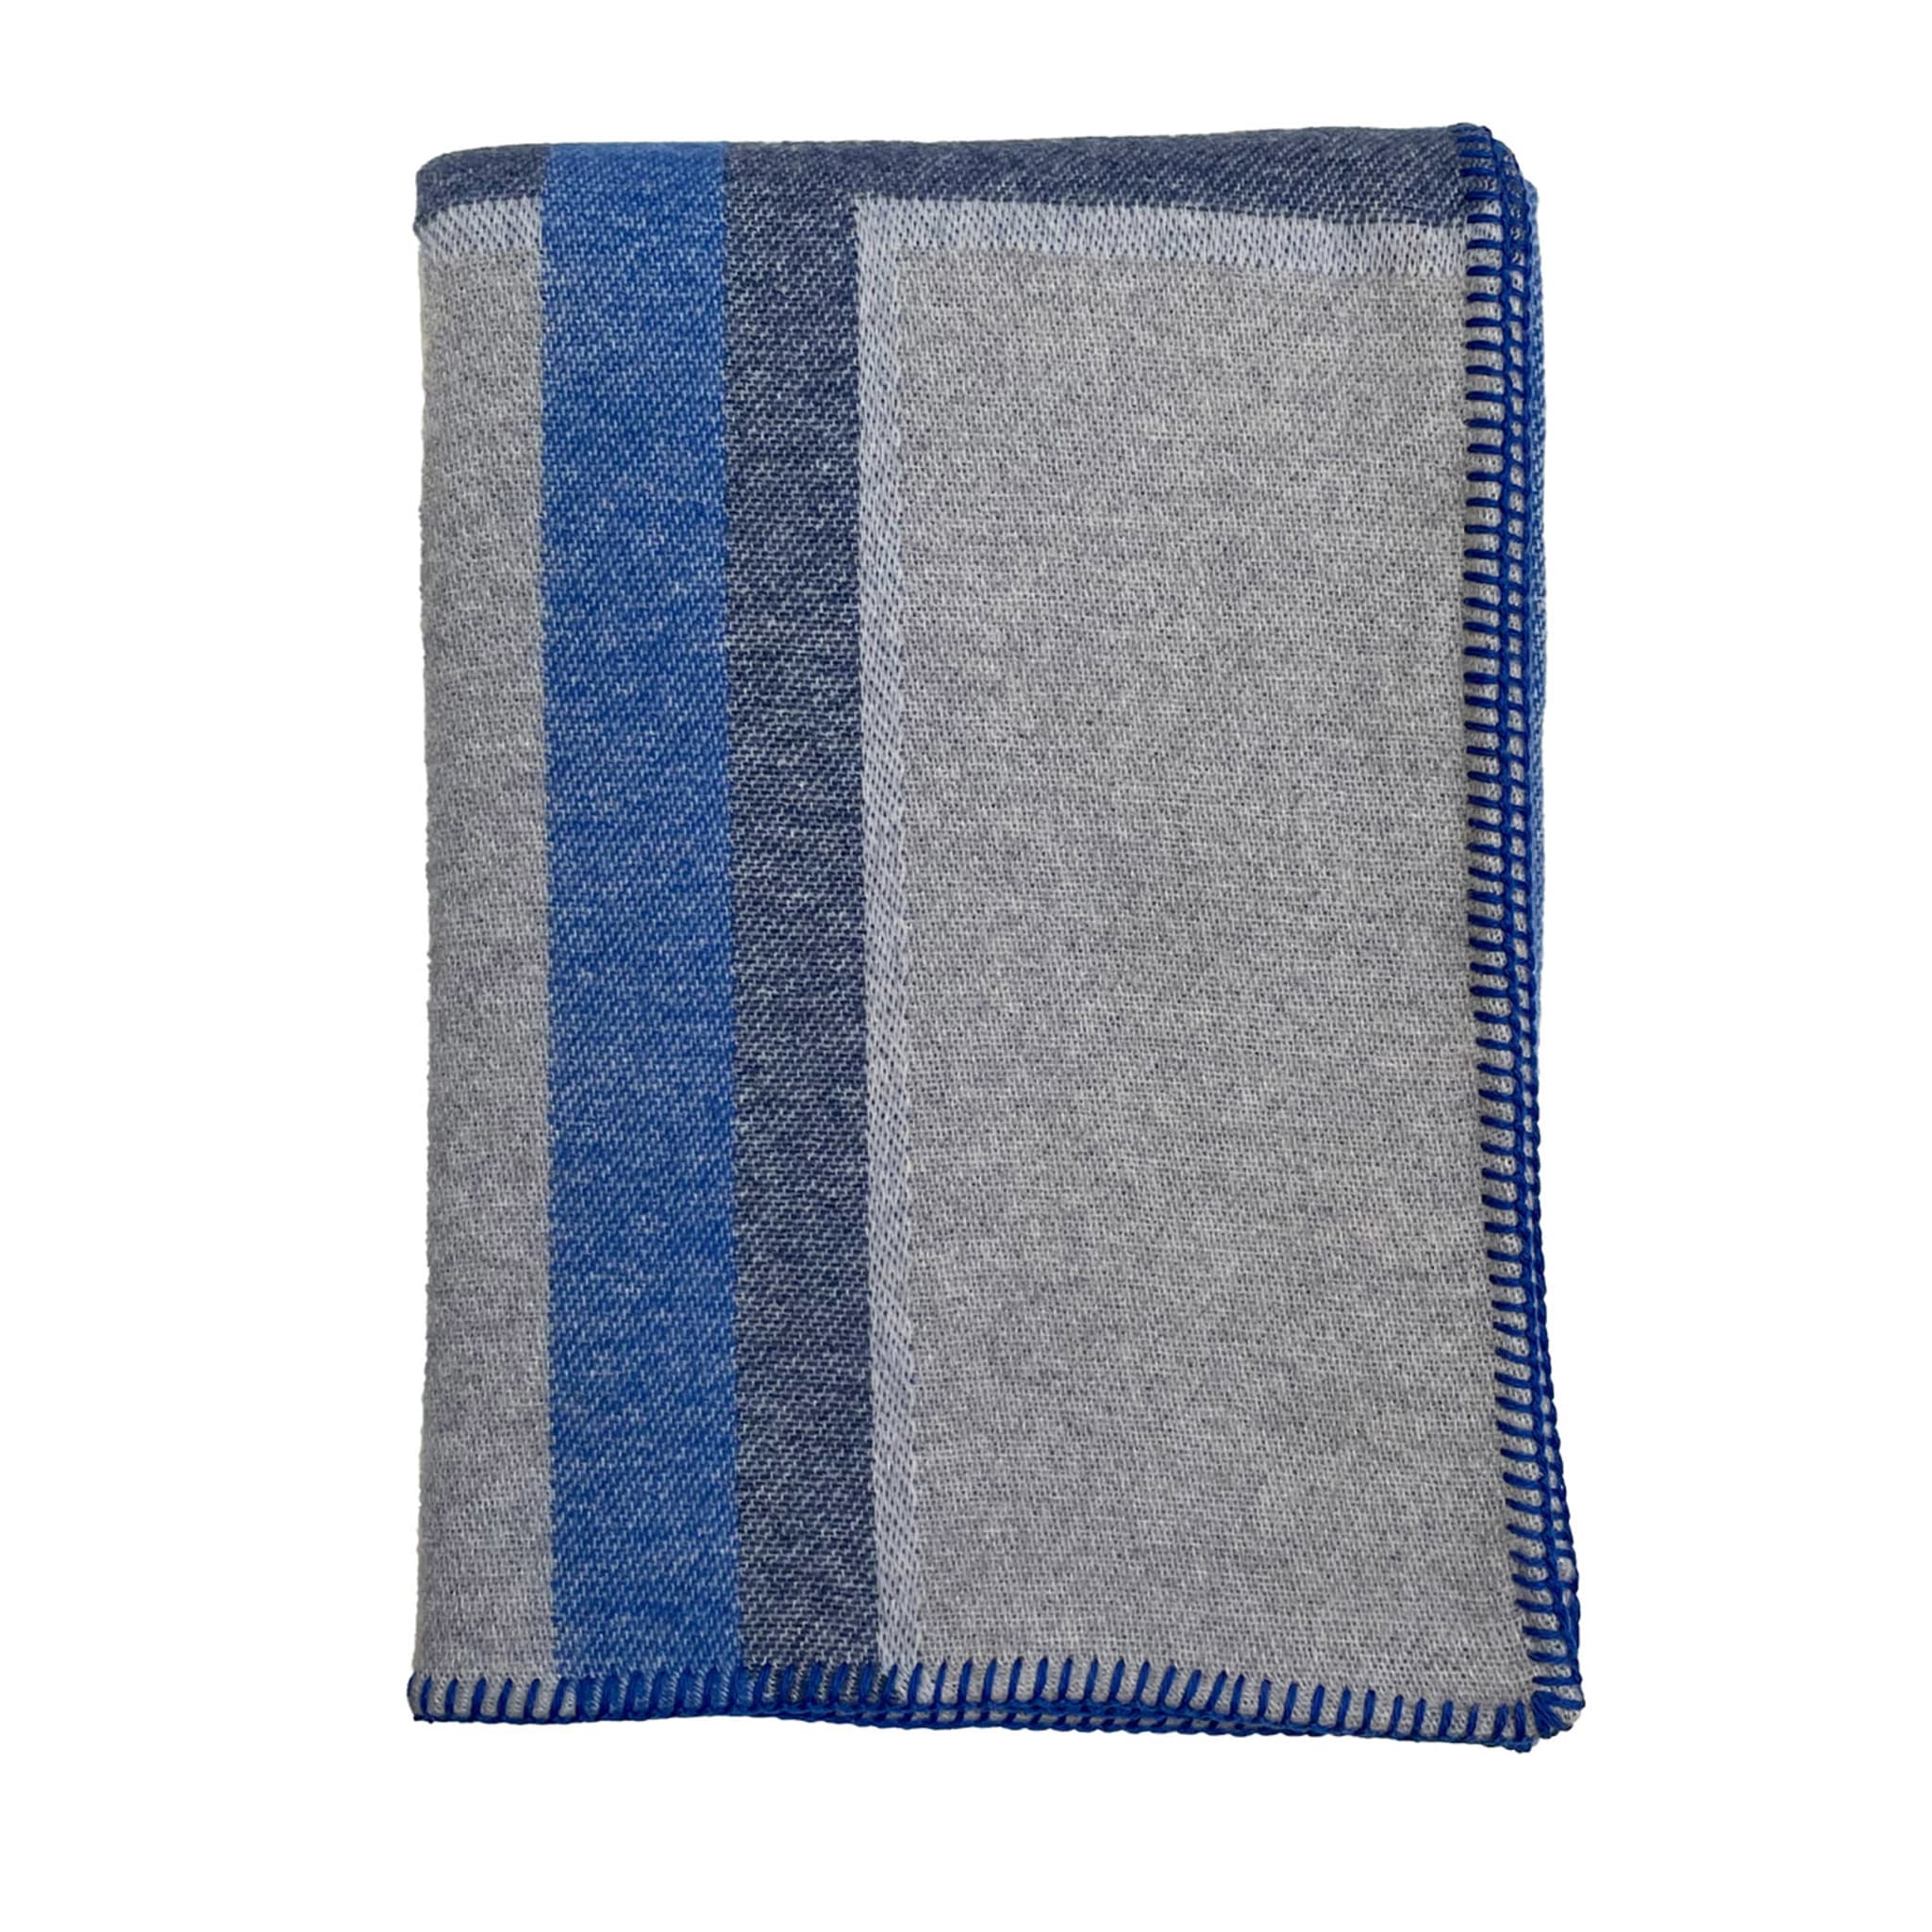 Cornice Blue & Gray Blanket - Main view